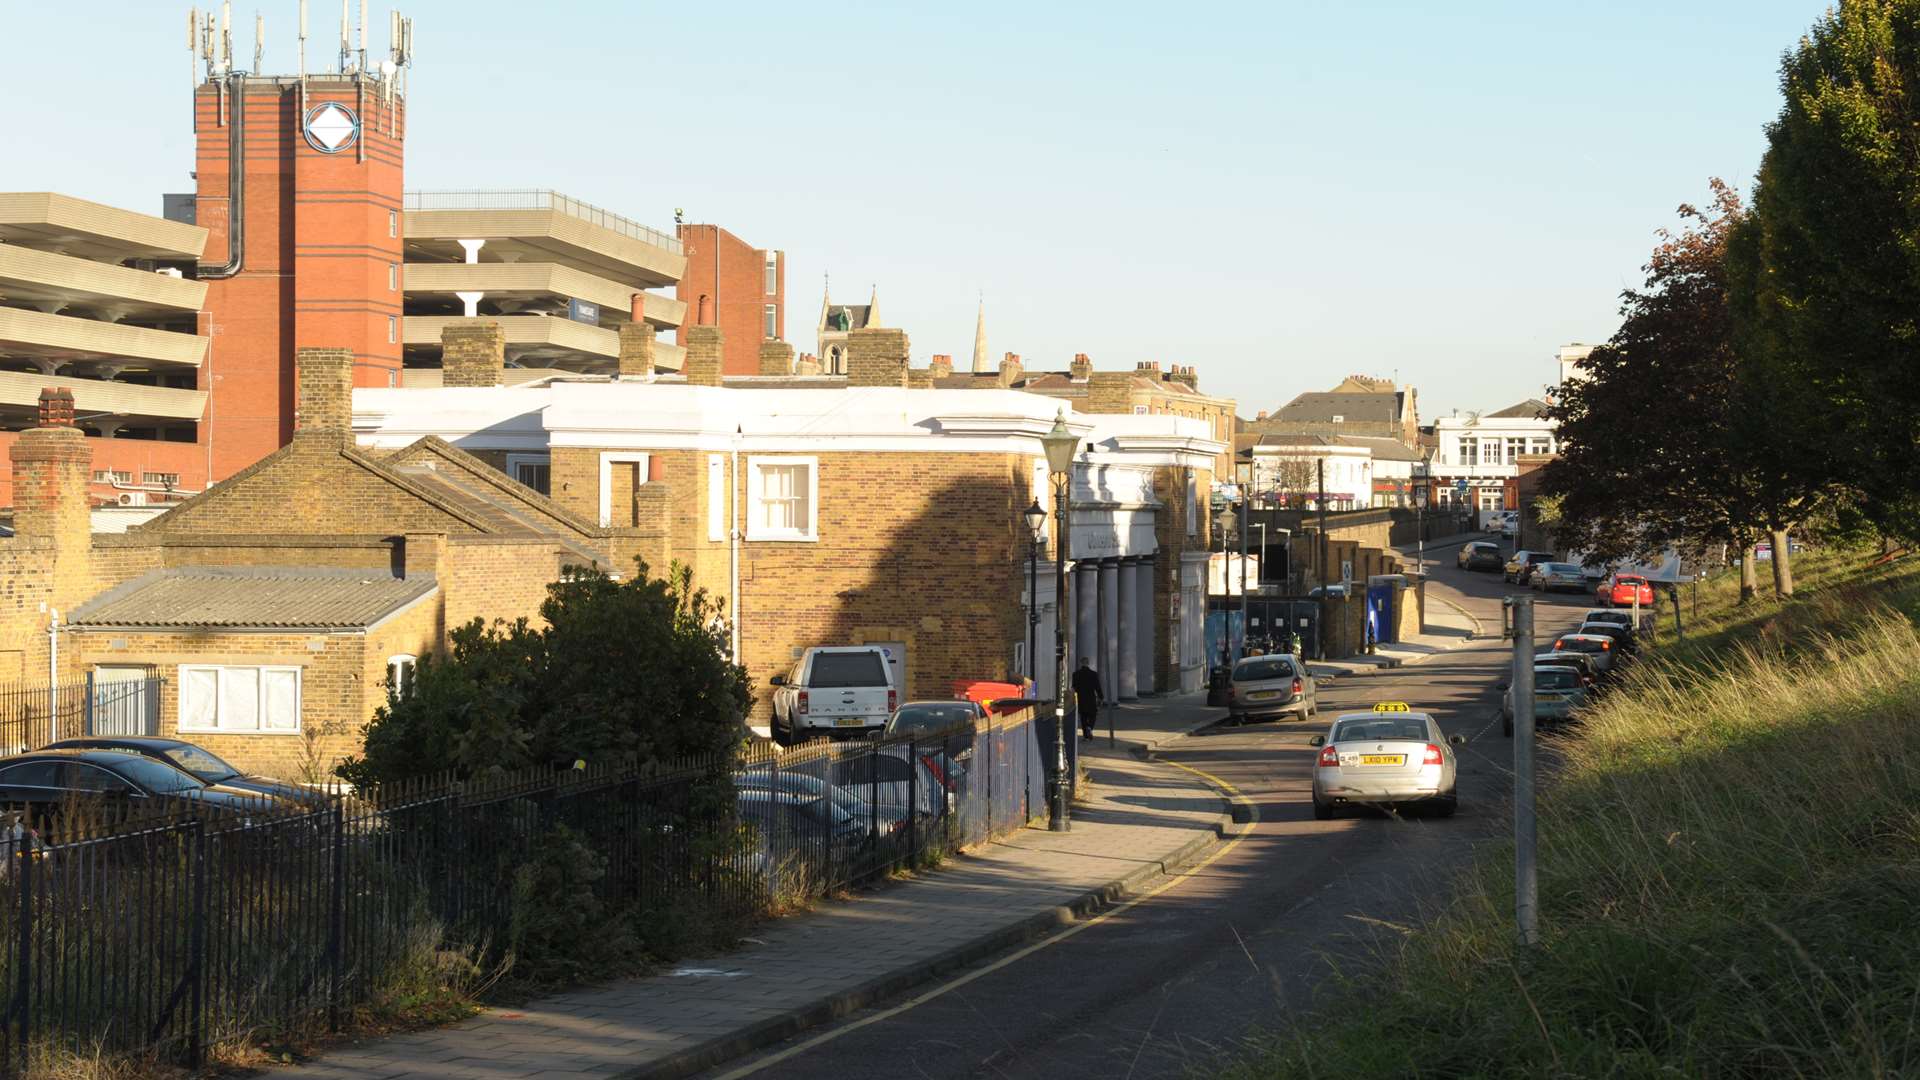 Rathmore Road, Gravesend. £9.5m development of the area.